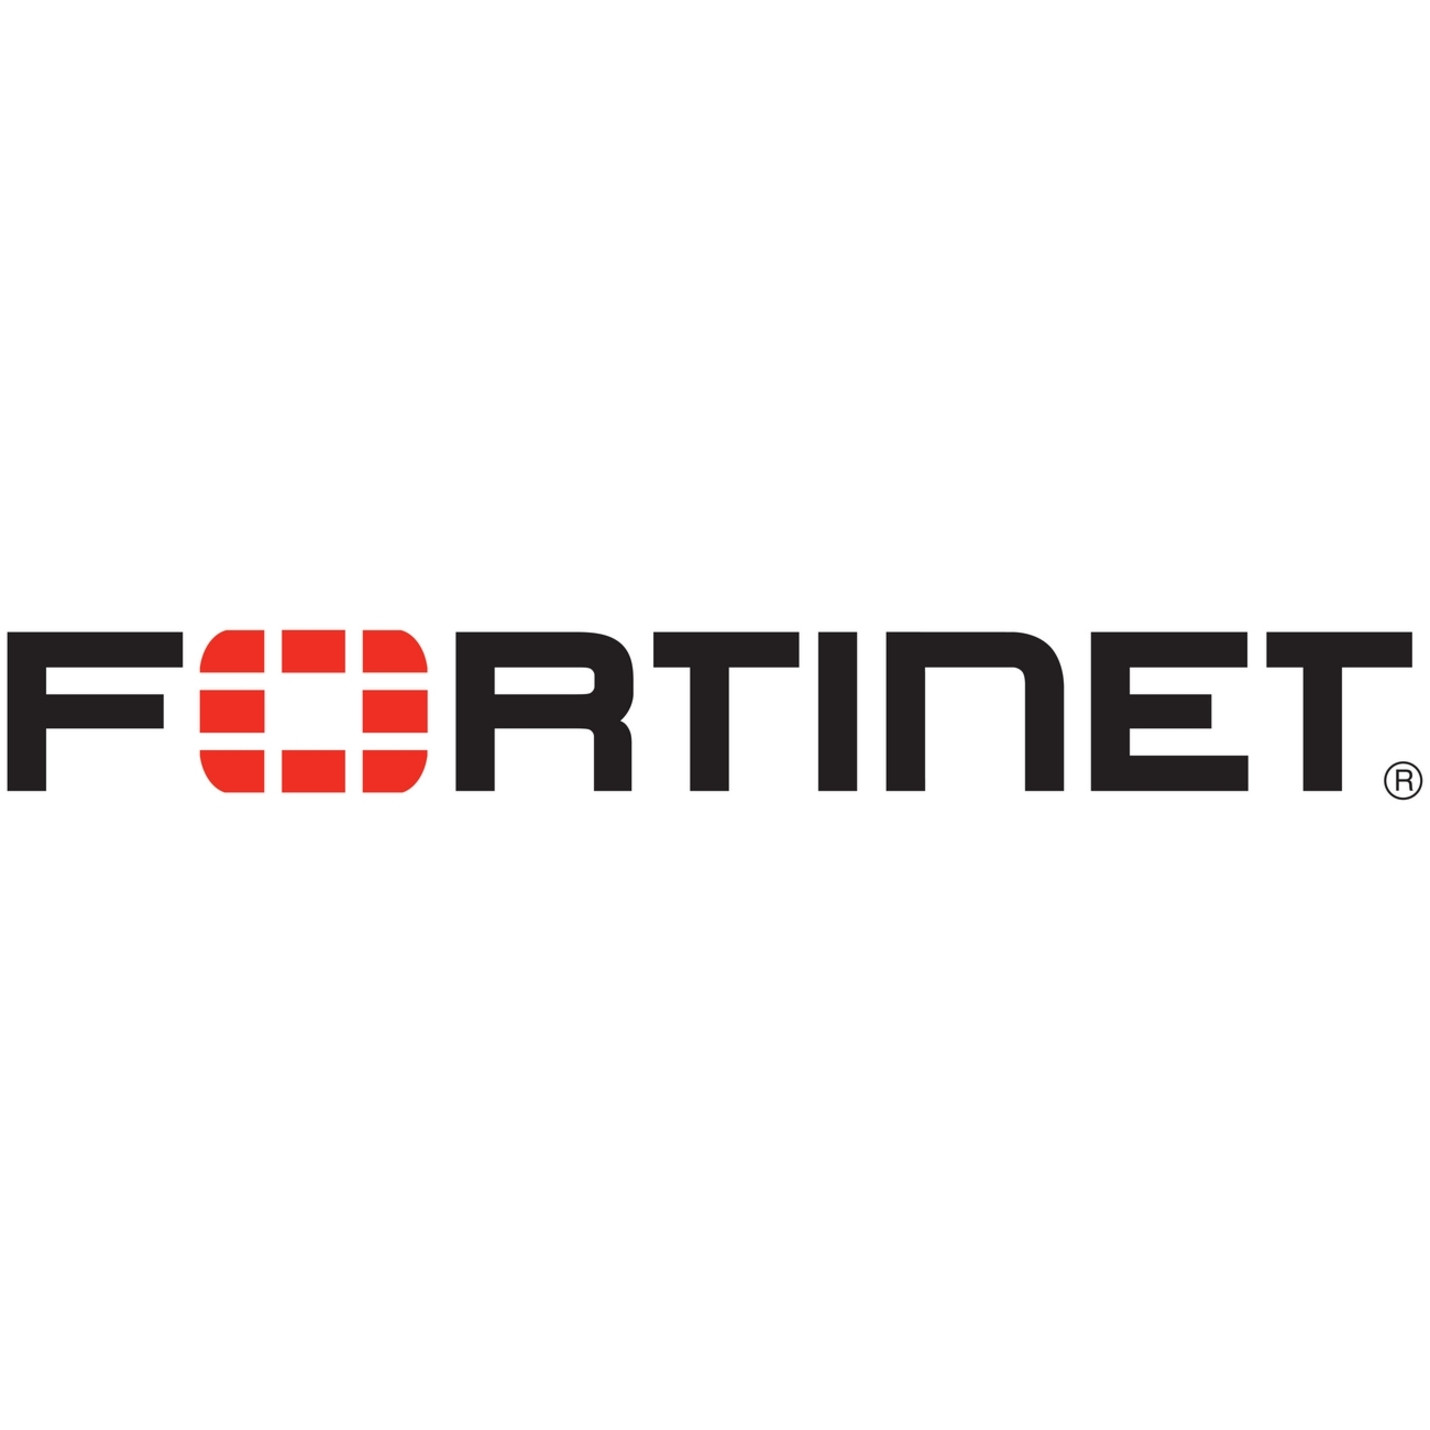 Fortinet Enterprise Bundle (FortiCare plus NGFW, AV, Web Filtering, Antispam, Botnet IP/Domain, FortiSandbox Cloud and Mobile Secu… FC-10-00144-871-0…